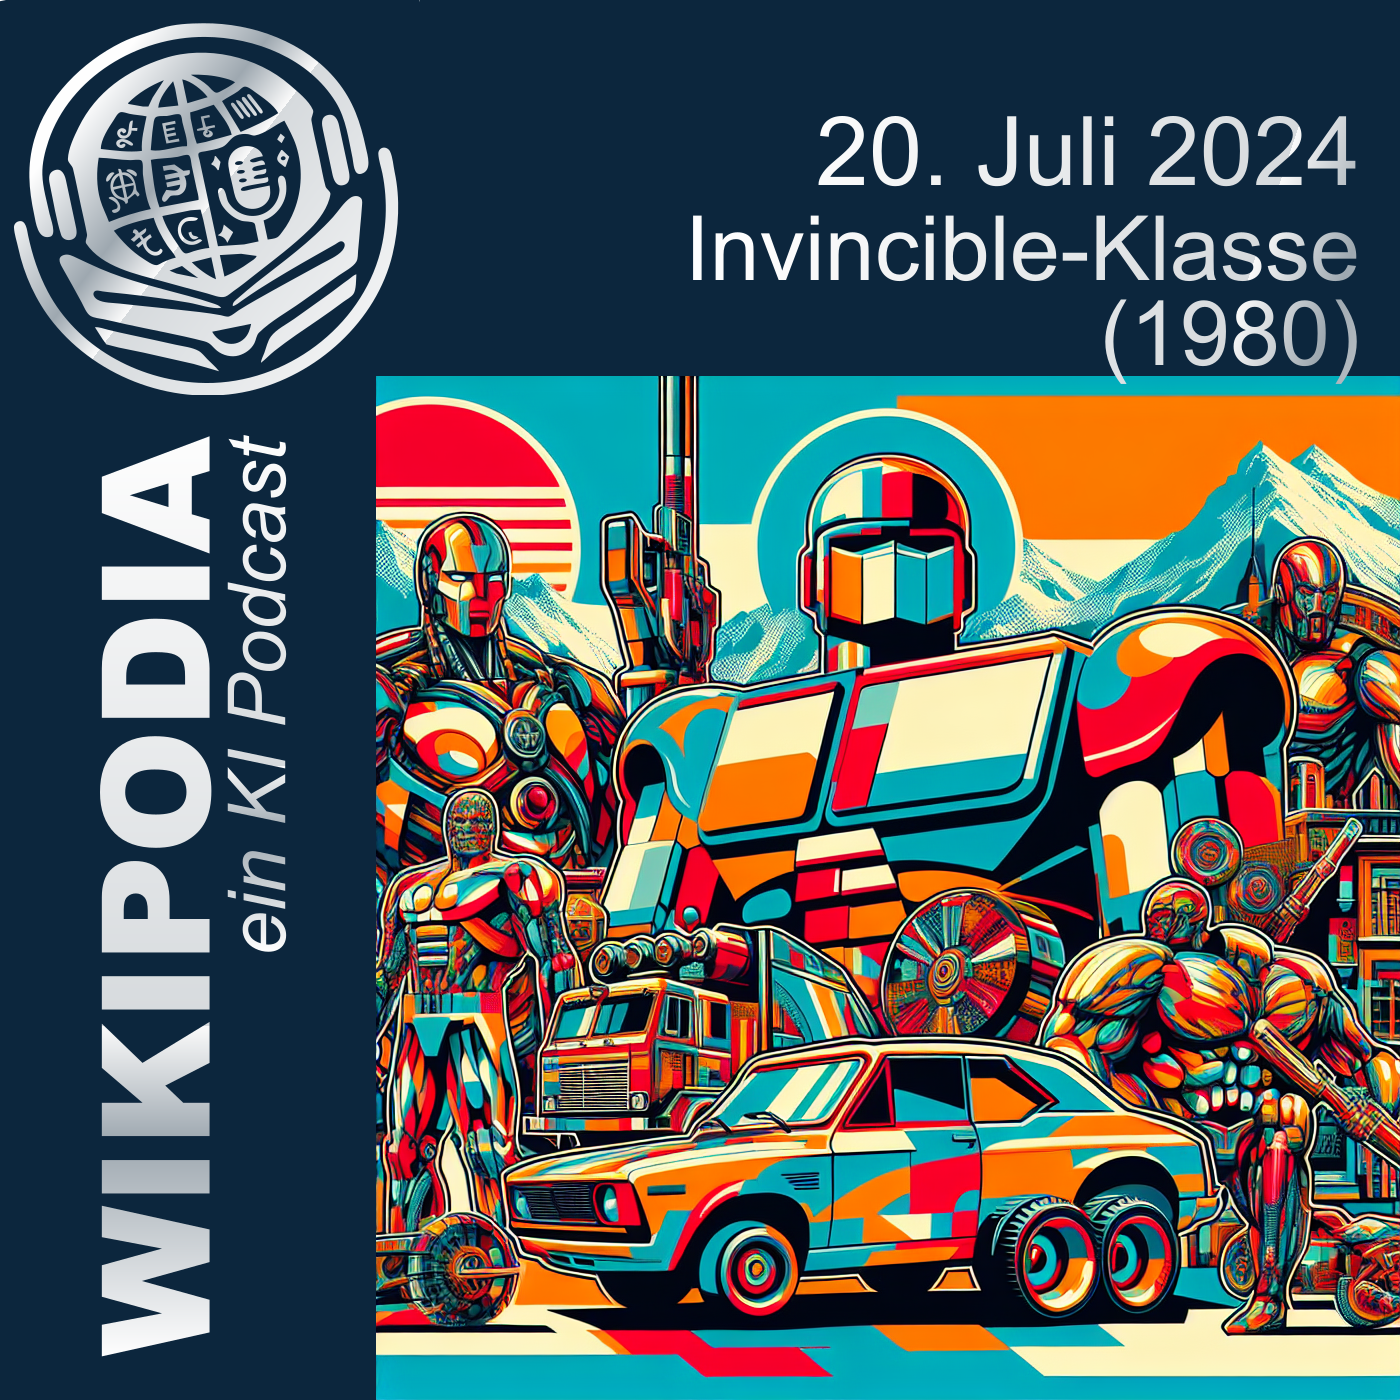 Invincible-Klasse (1980)